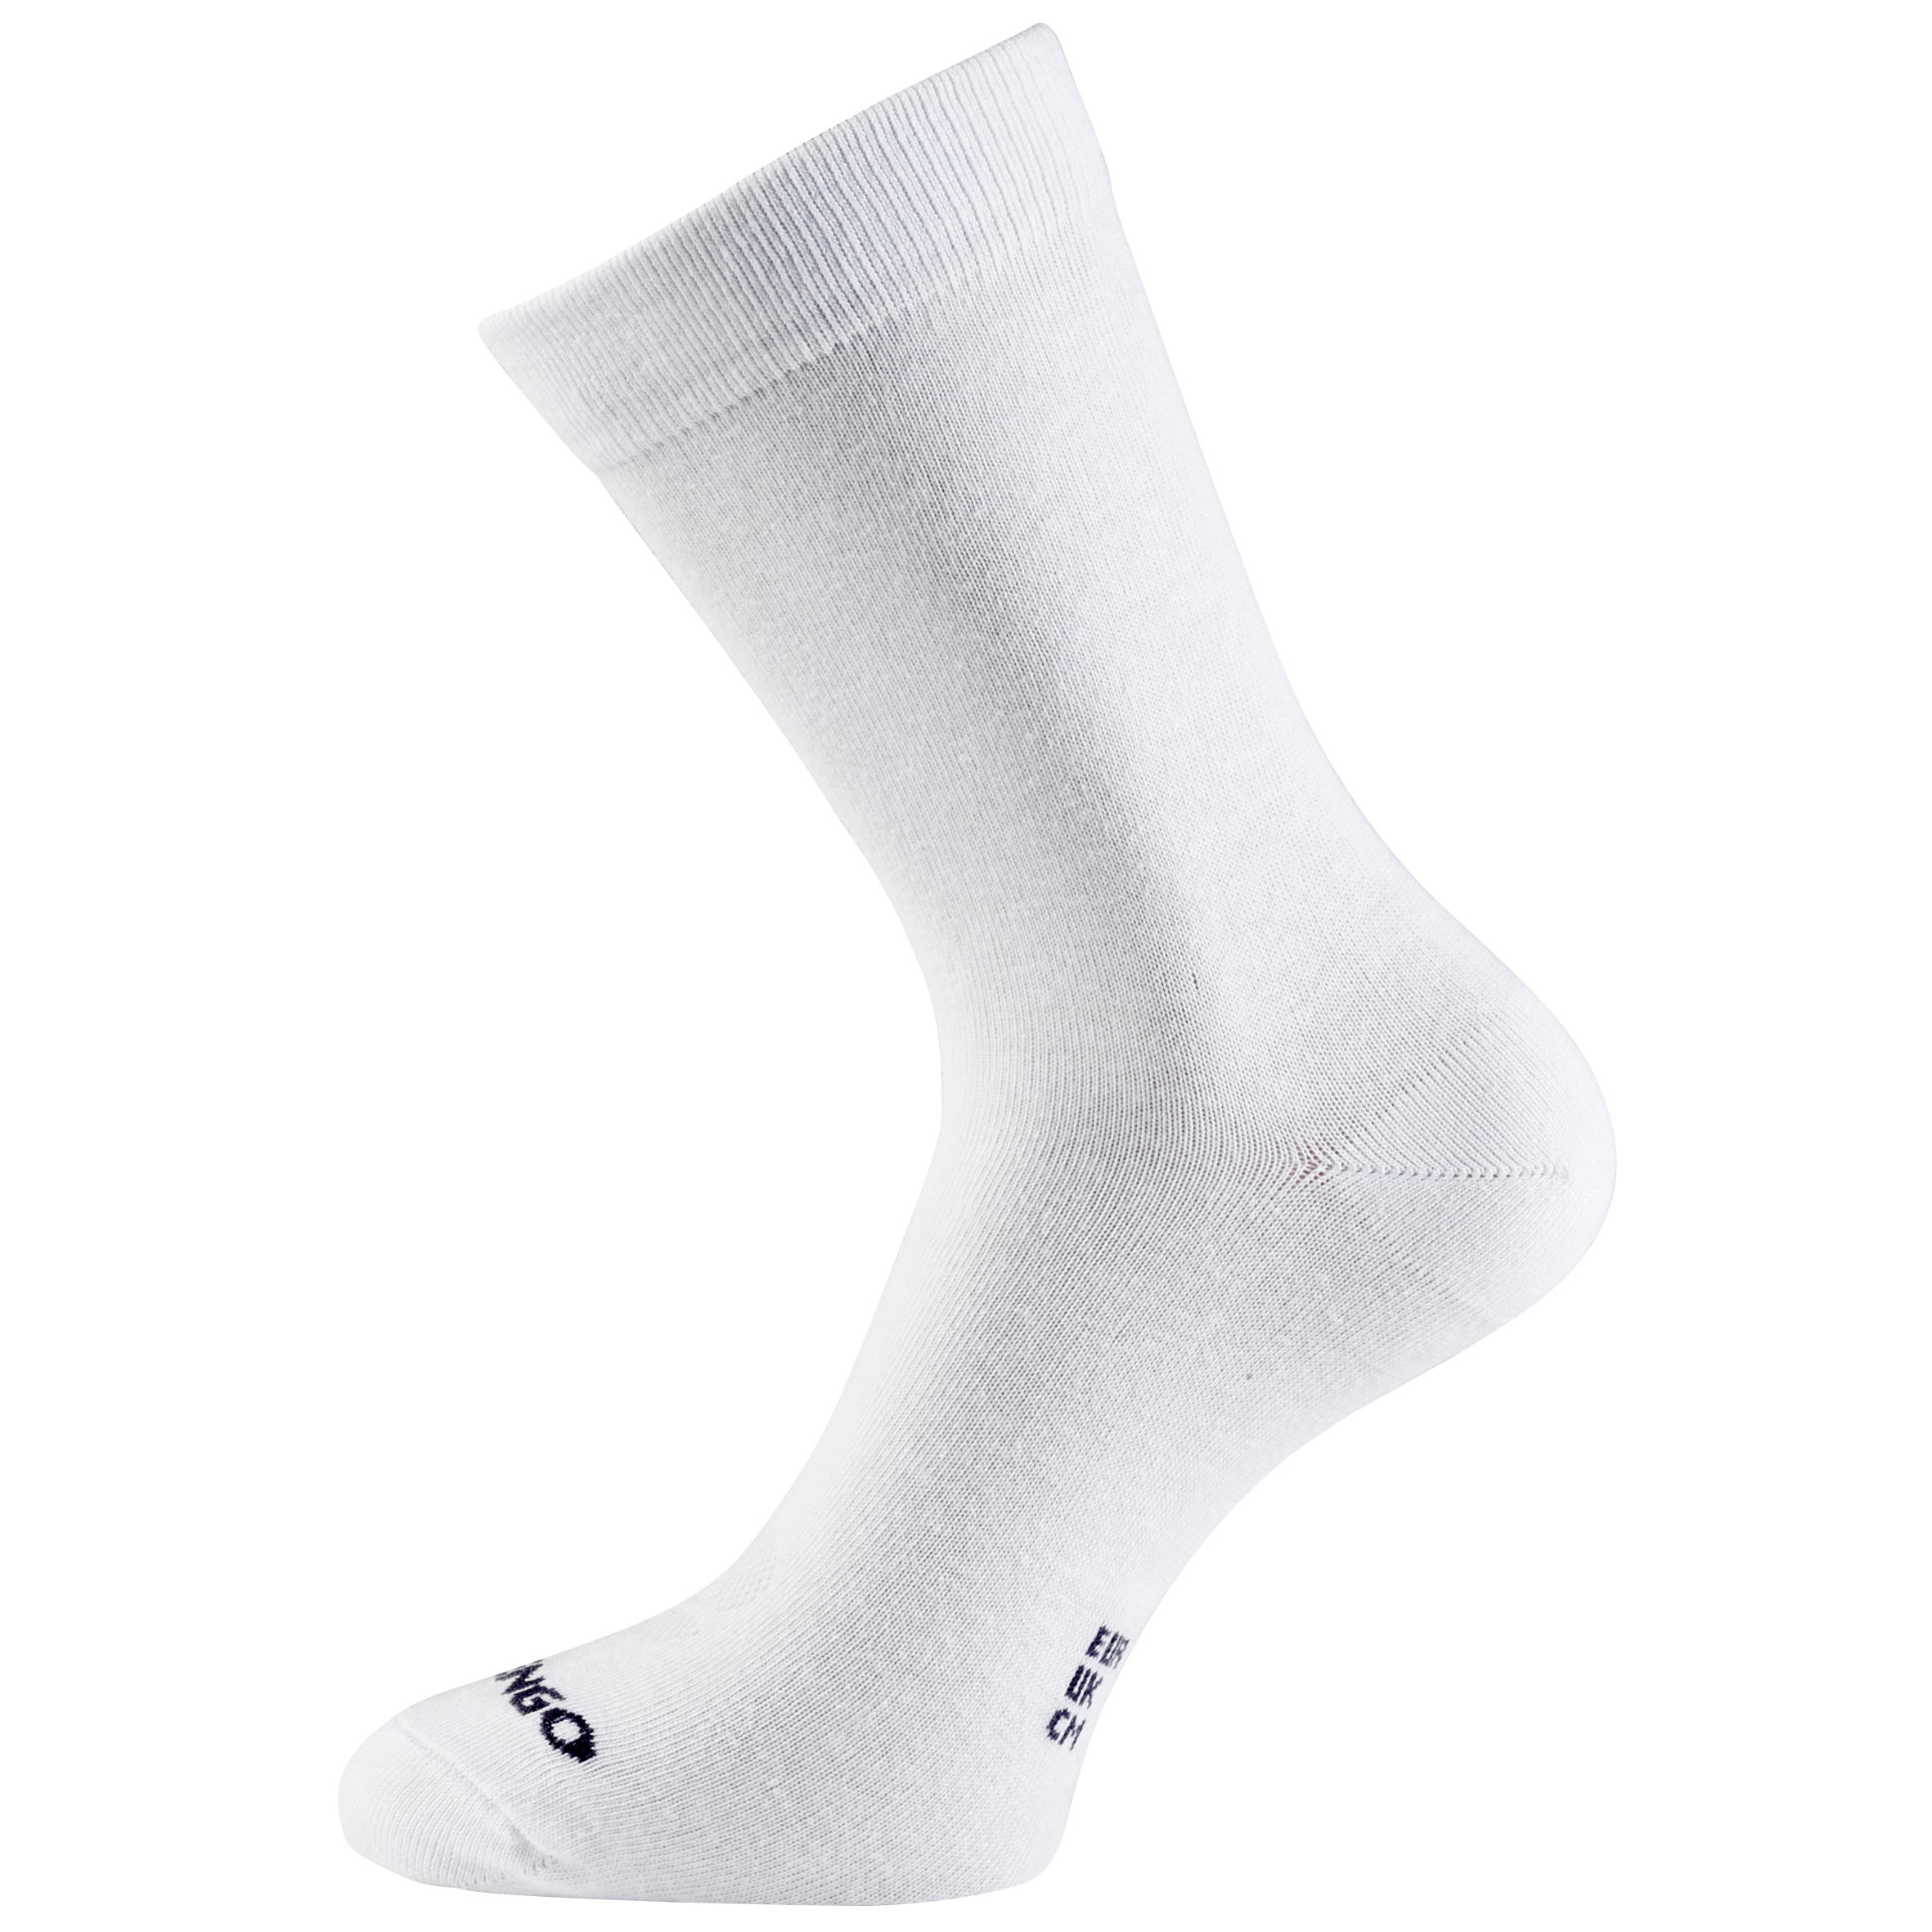 RS 160 Adult High Sports Socks Tri-Pack - White 4/9